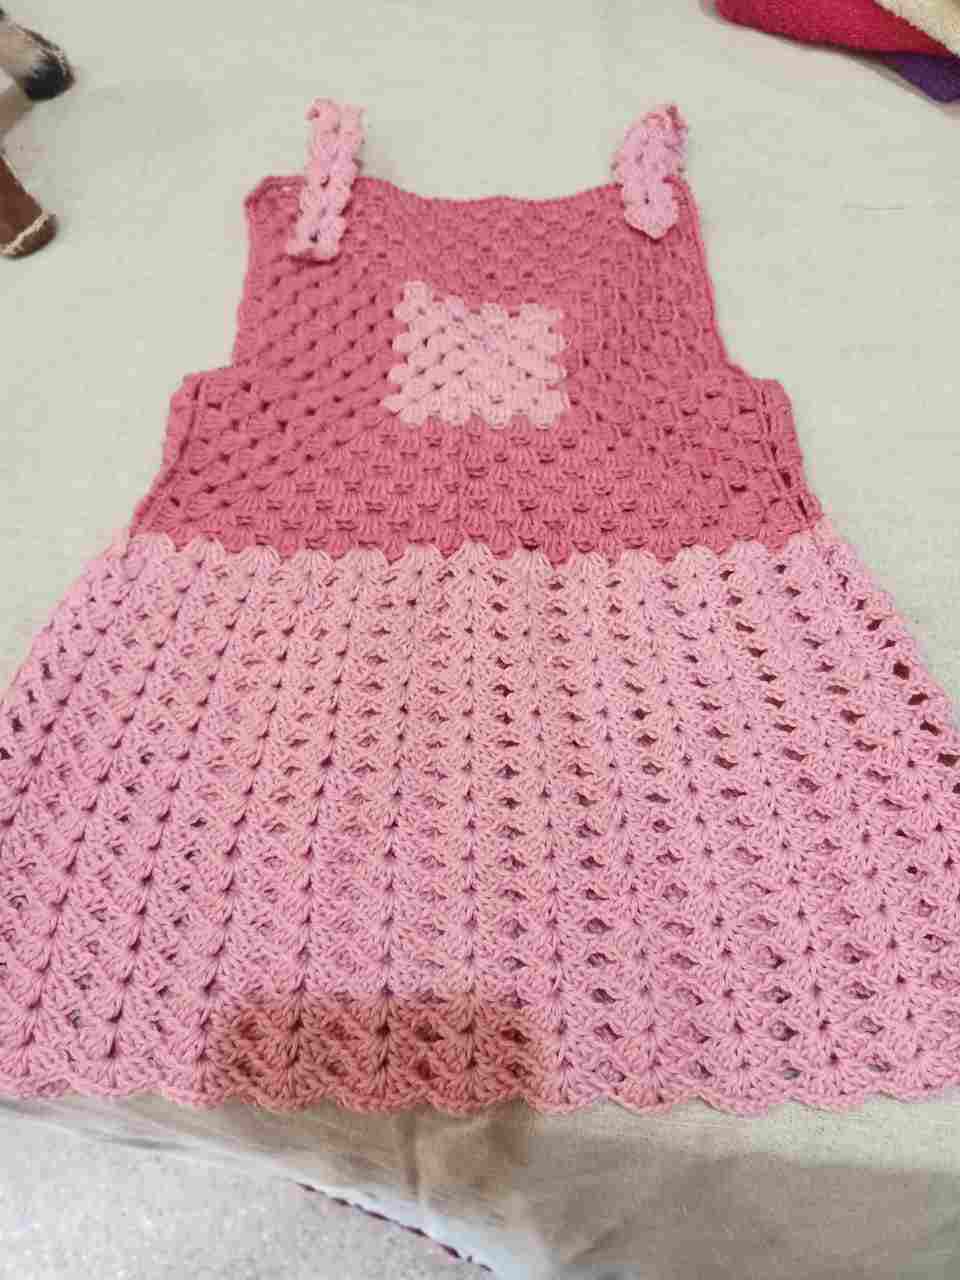 Cotton baby dress